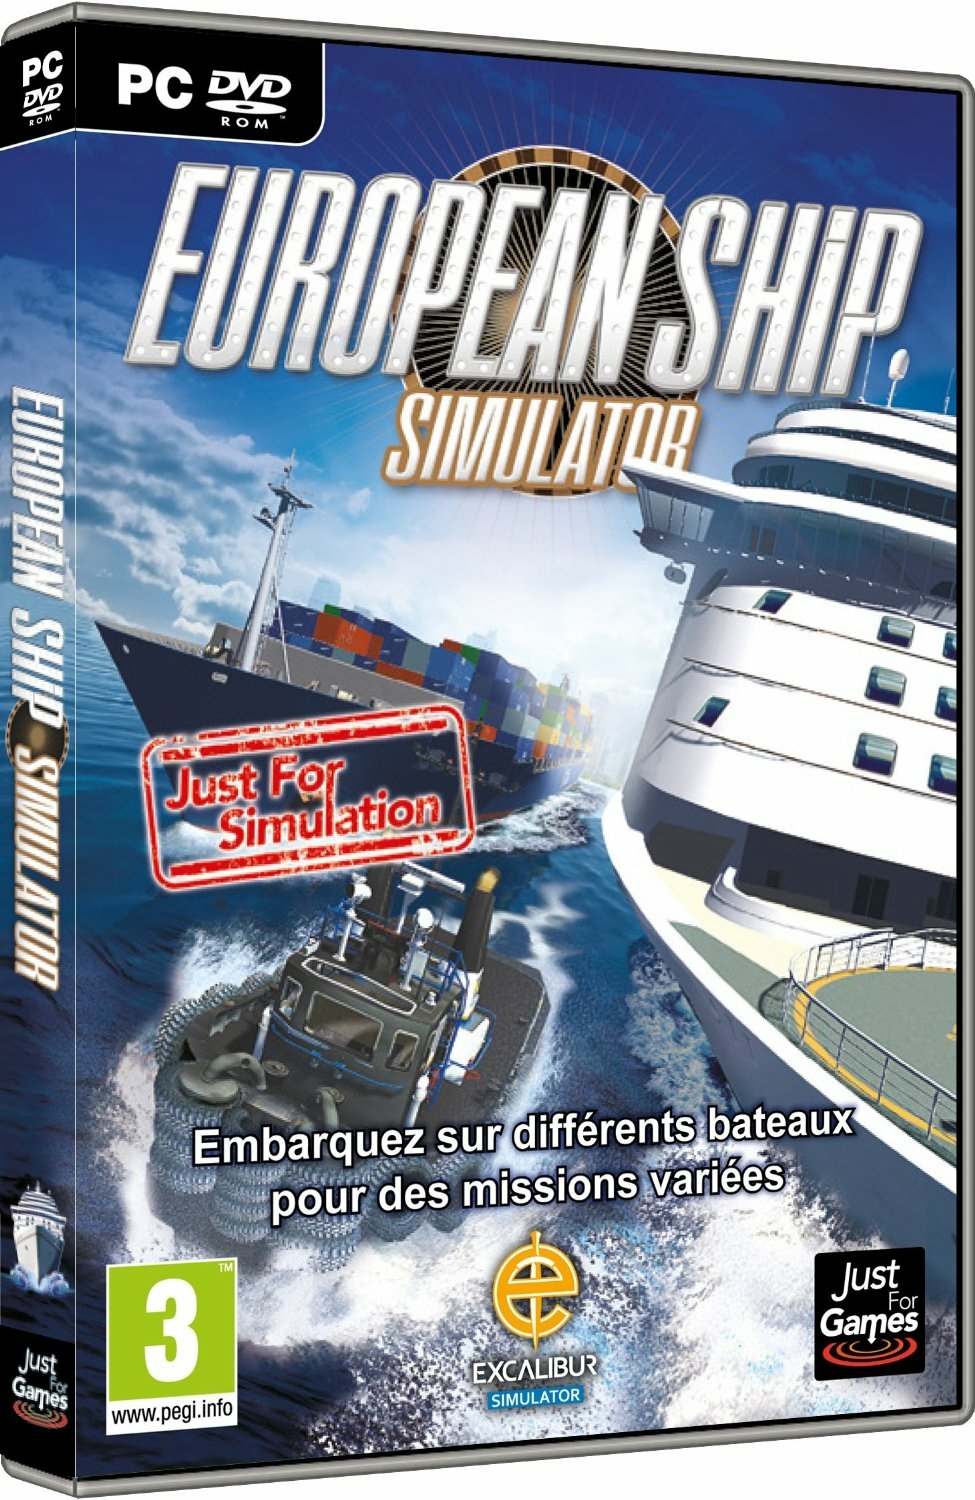 ship simulator game